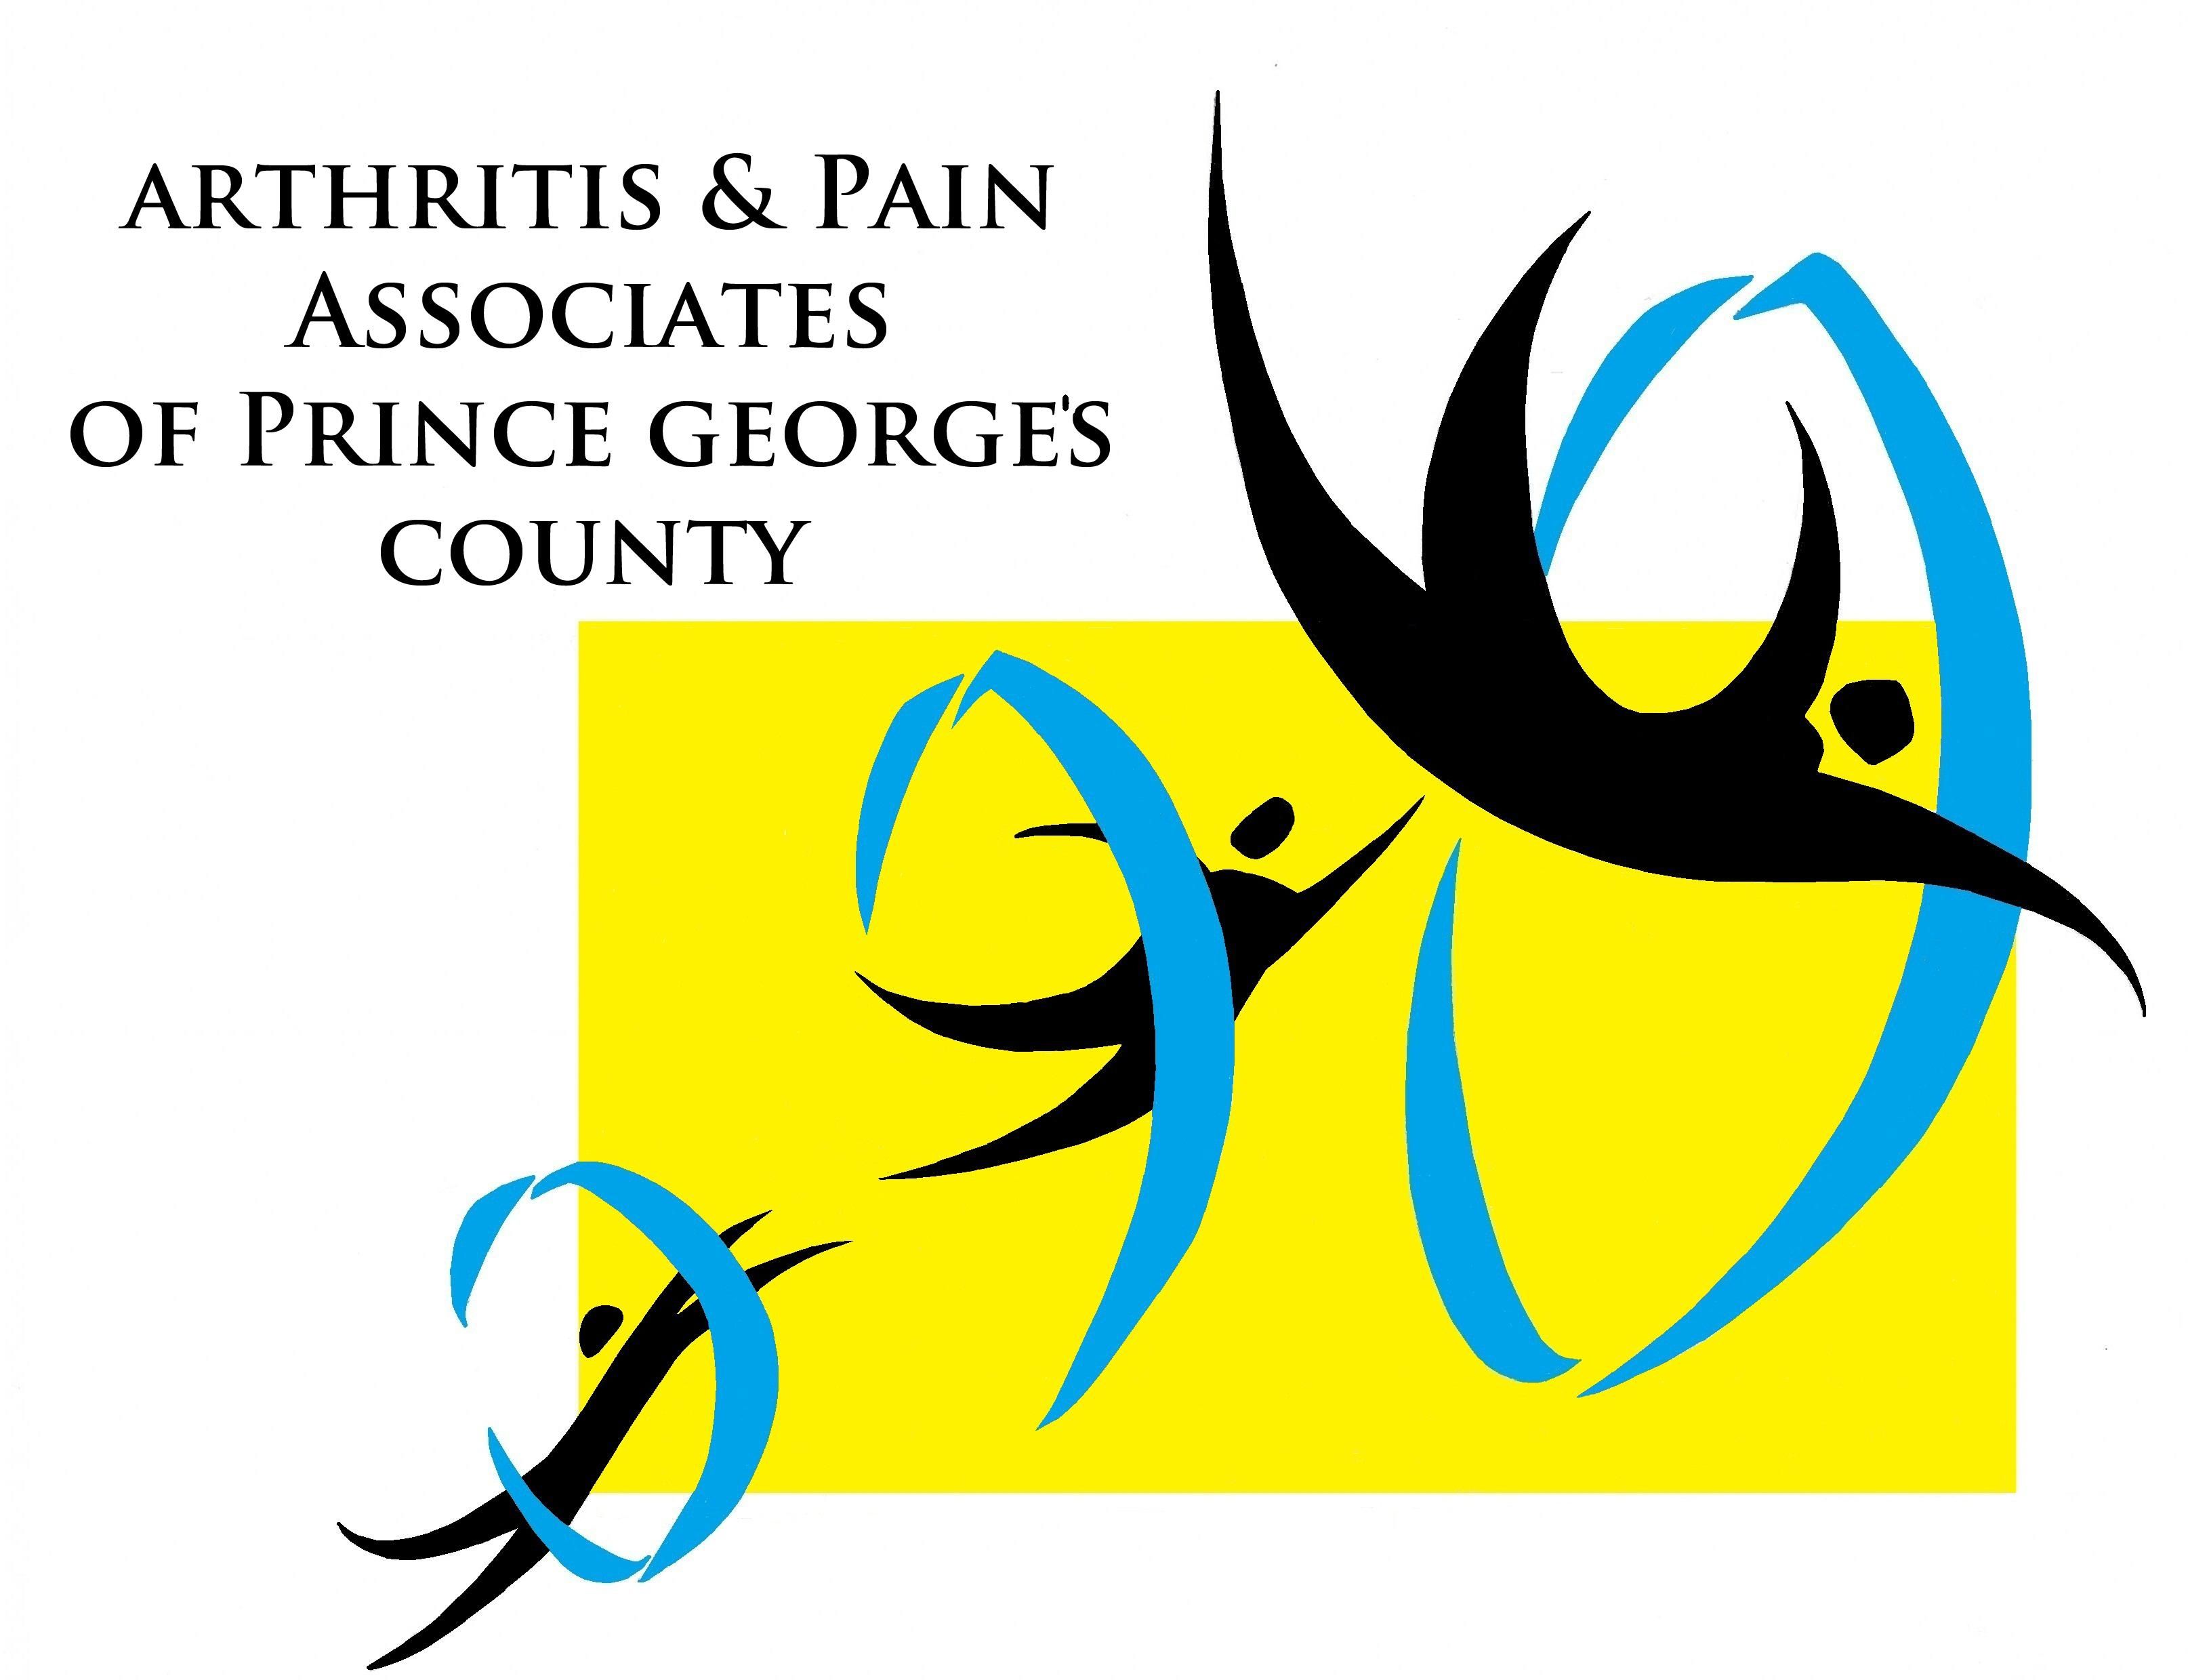 Arthritis & Pain Associates of Prince George's County